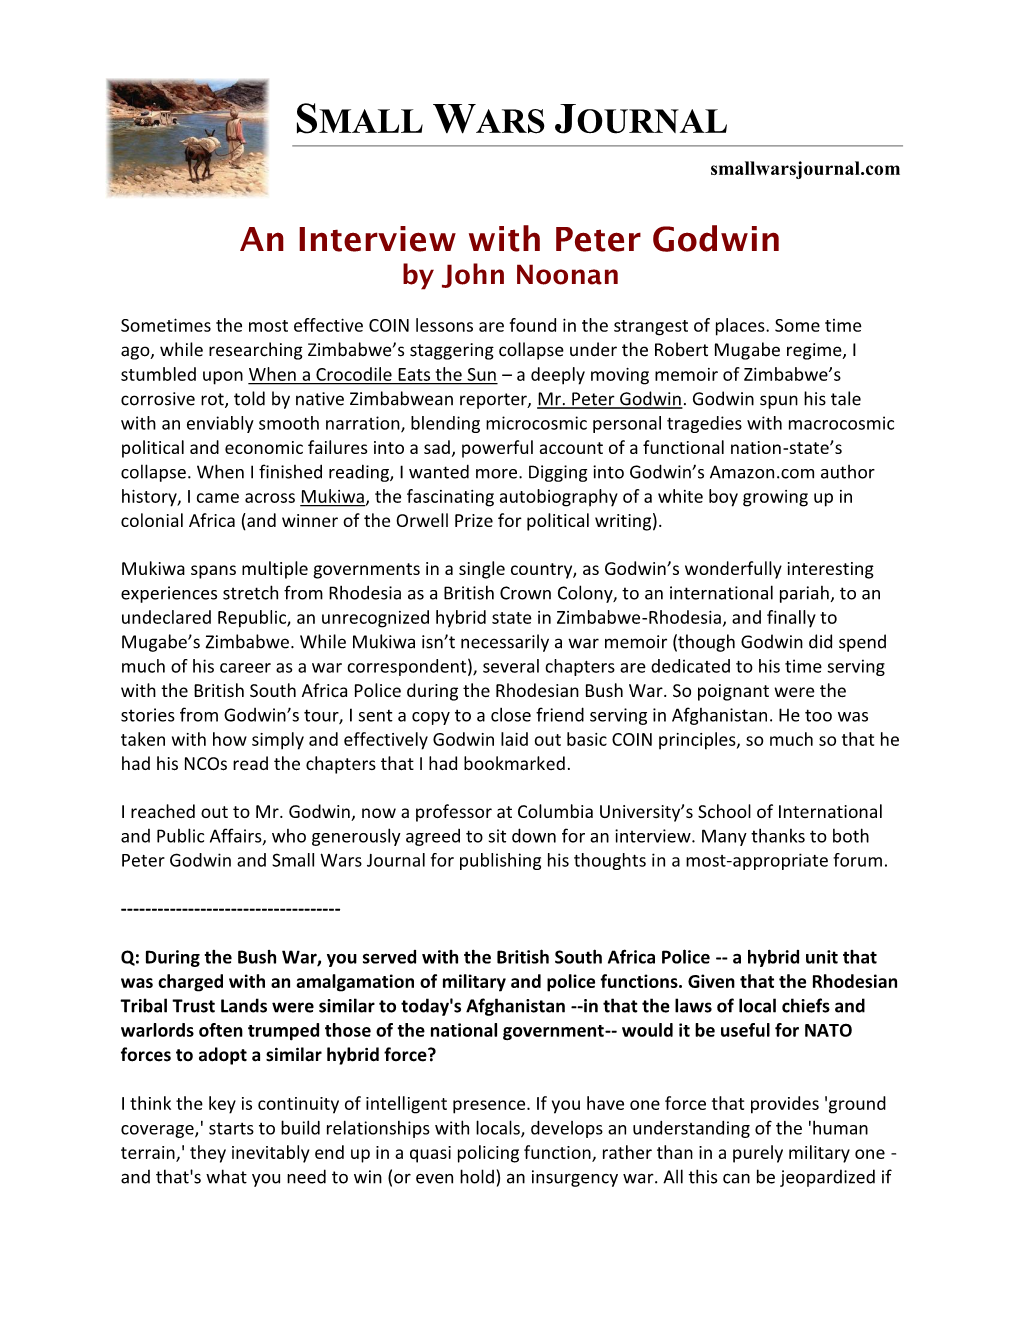 An Interview with Peter Godwin by John Noonan